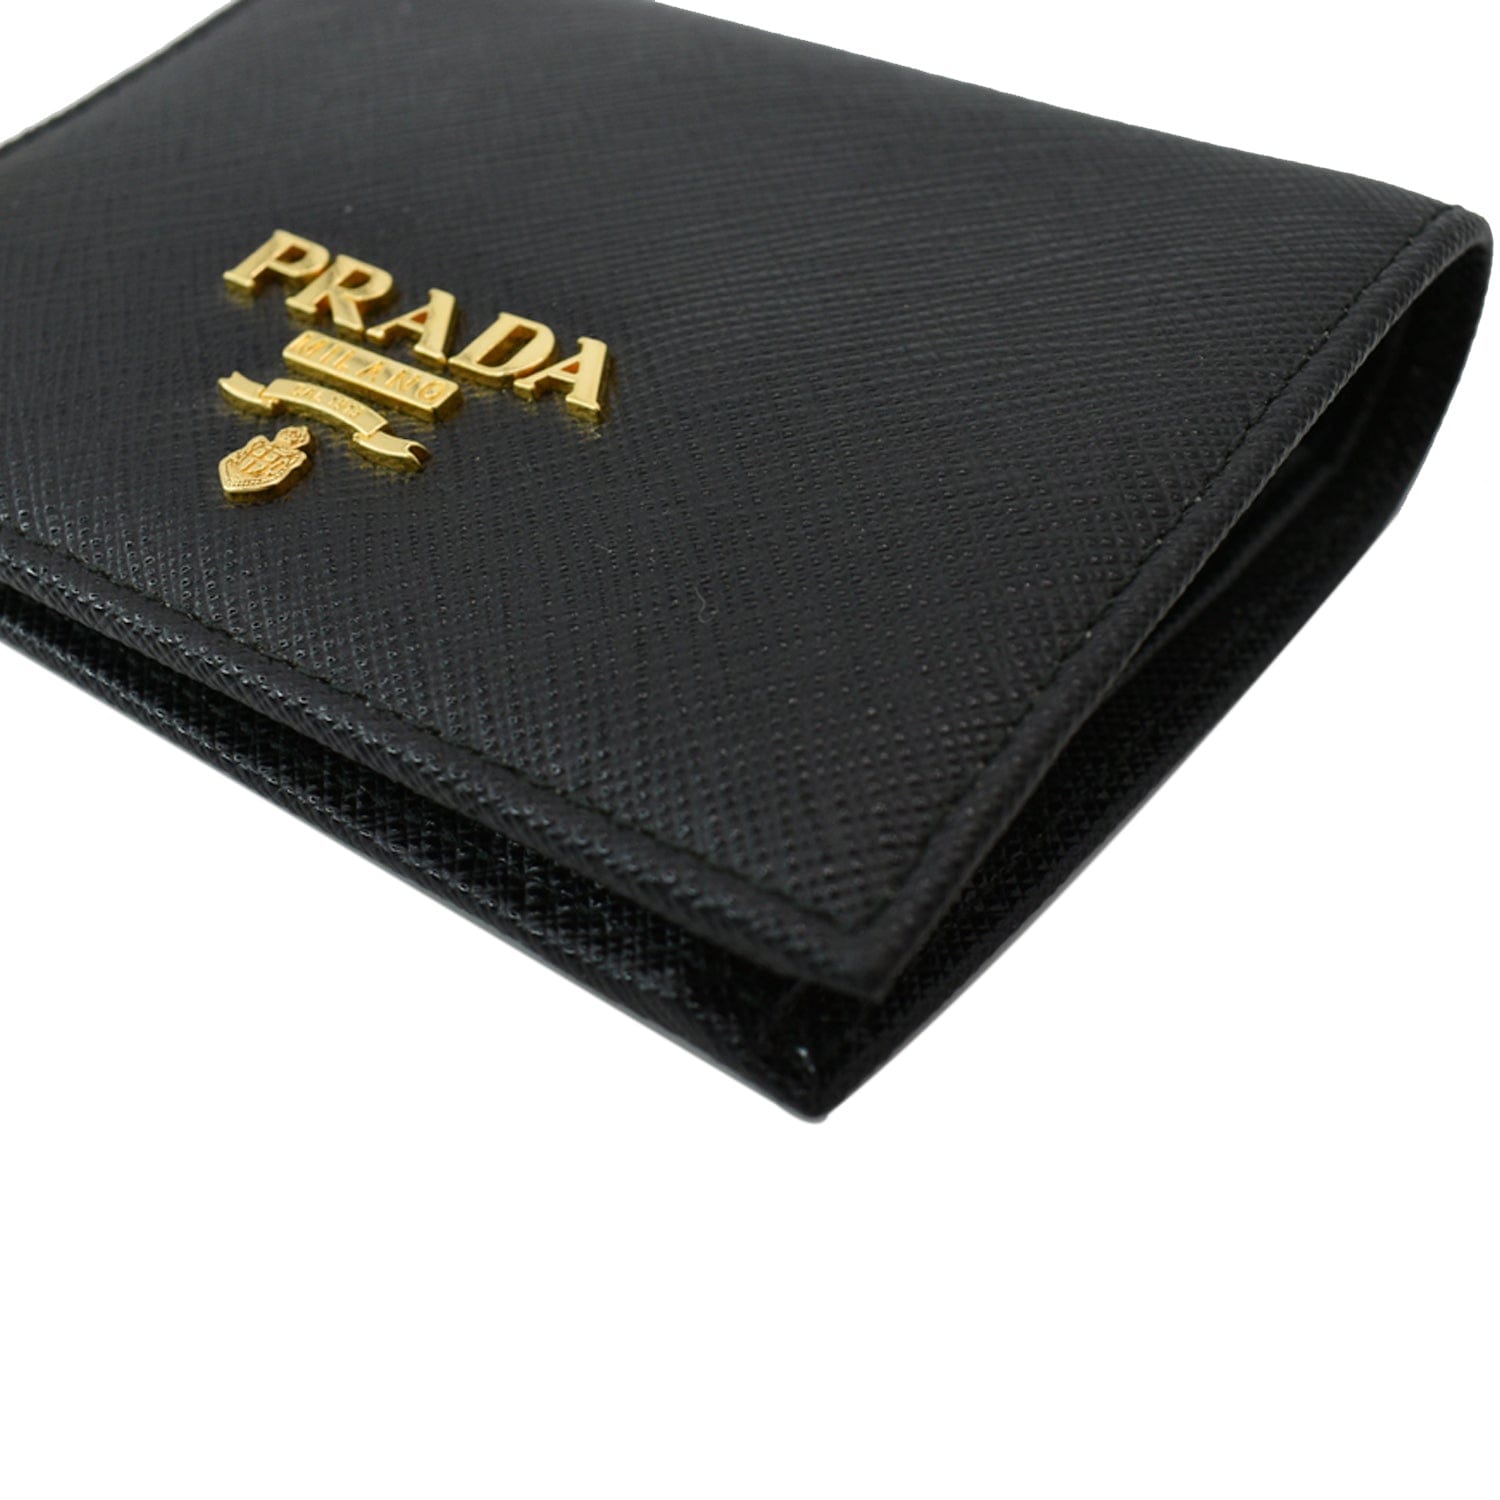 Prada Men's Saffiano Leather Wallet